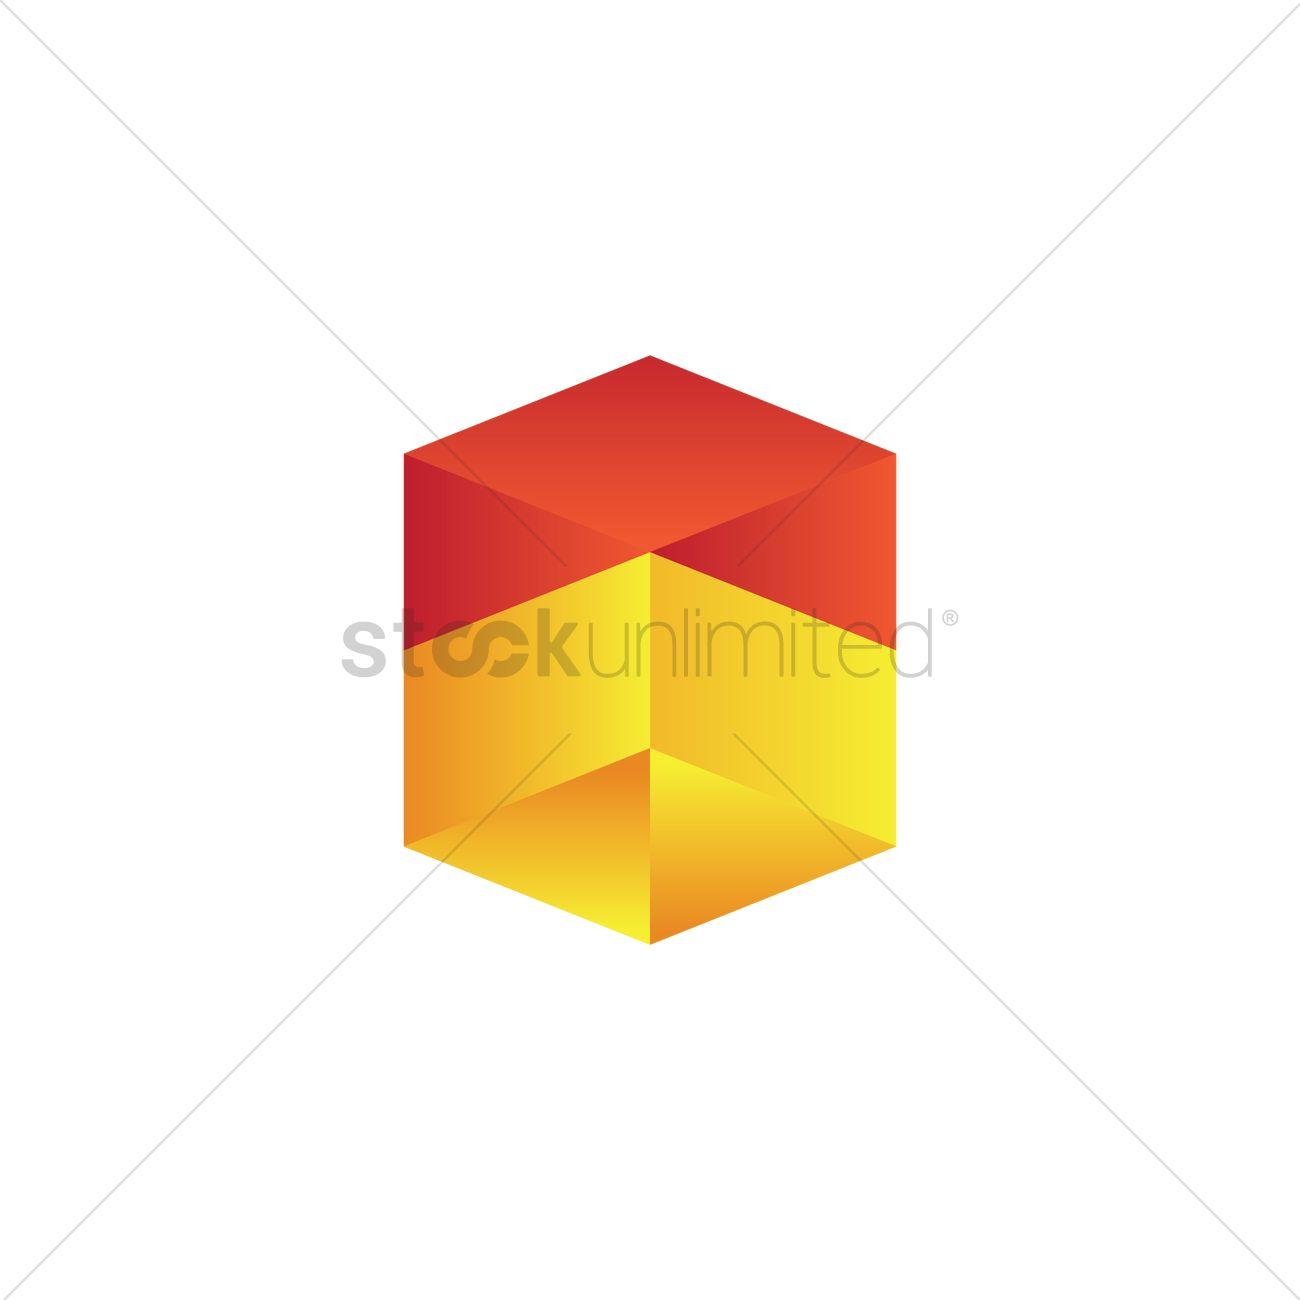 Yellow Cube Logo - Cube logo element Vector Image - 1629063 | StockUnlimited